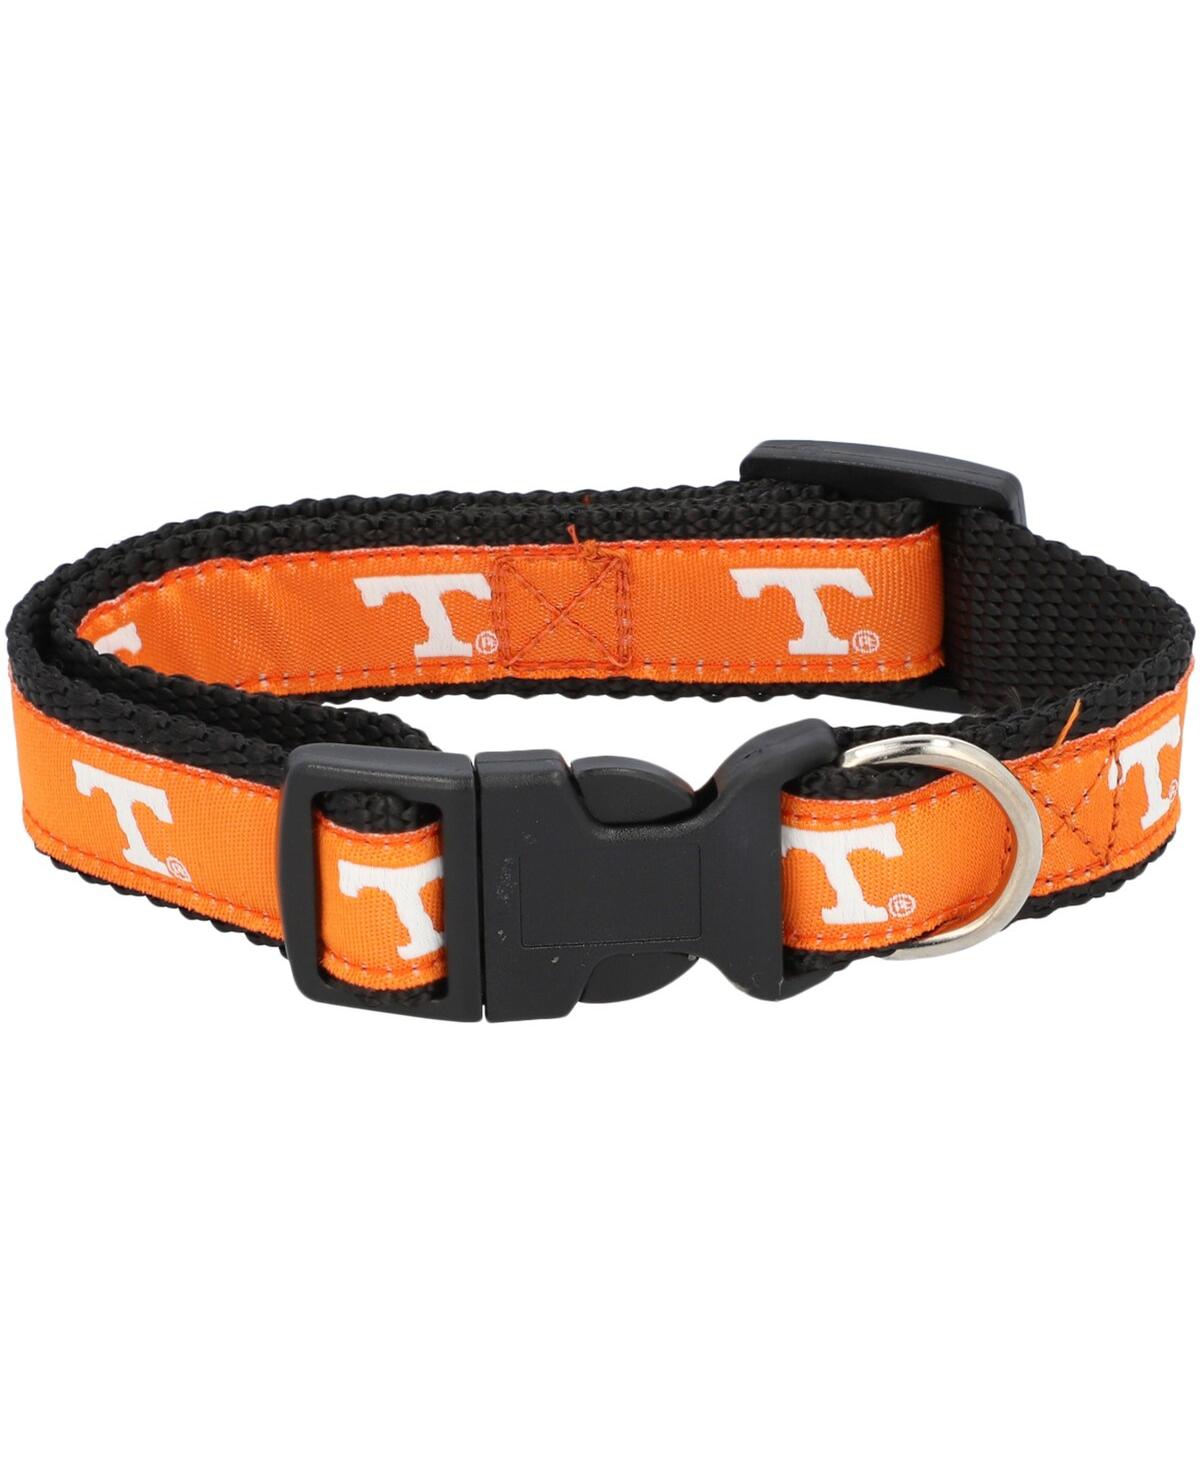 Tennessee Volunteers Narrow Dog Collar - Orange